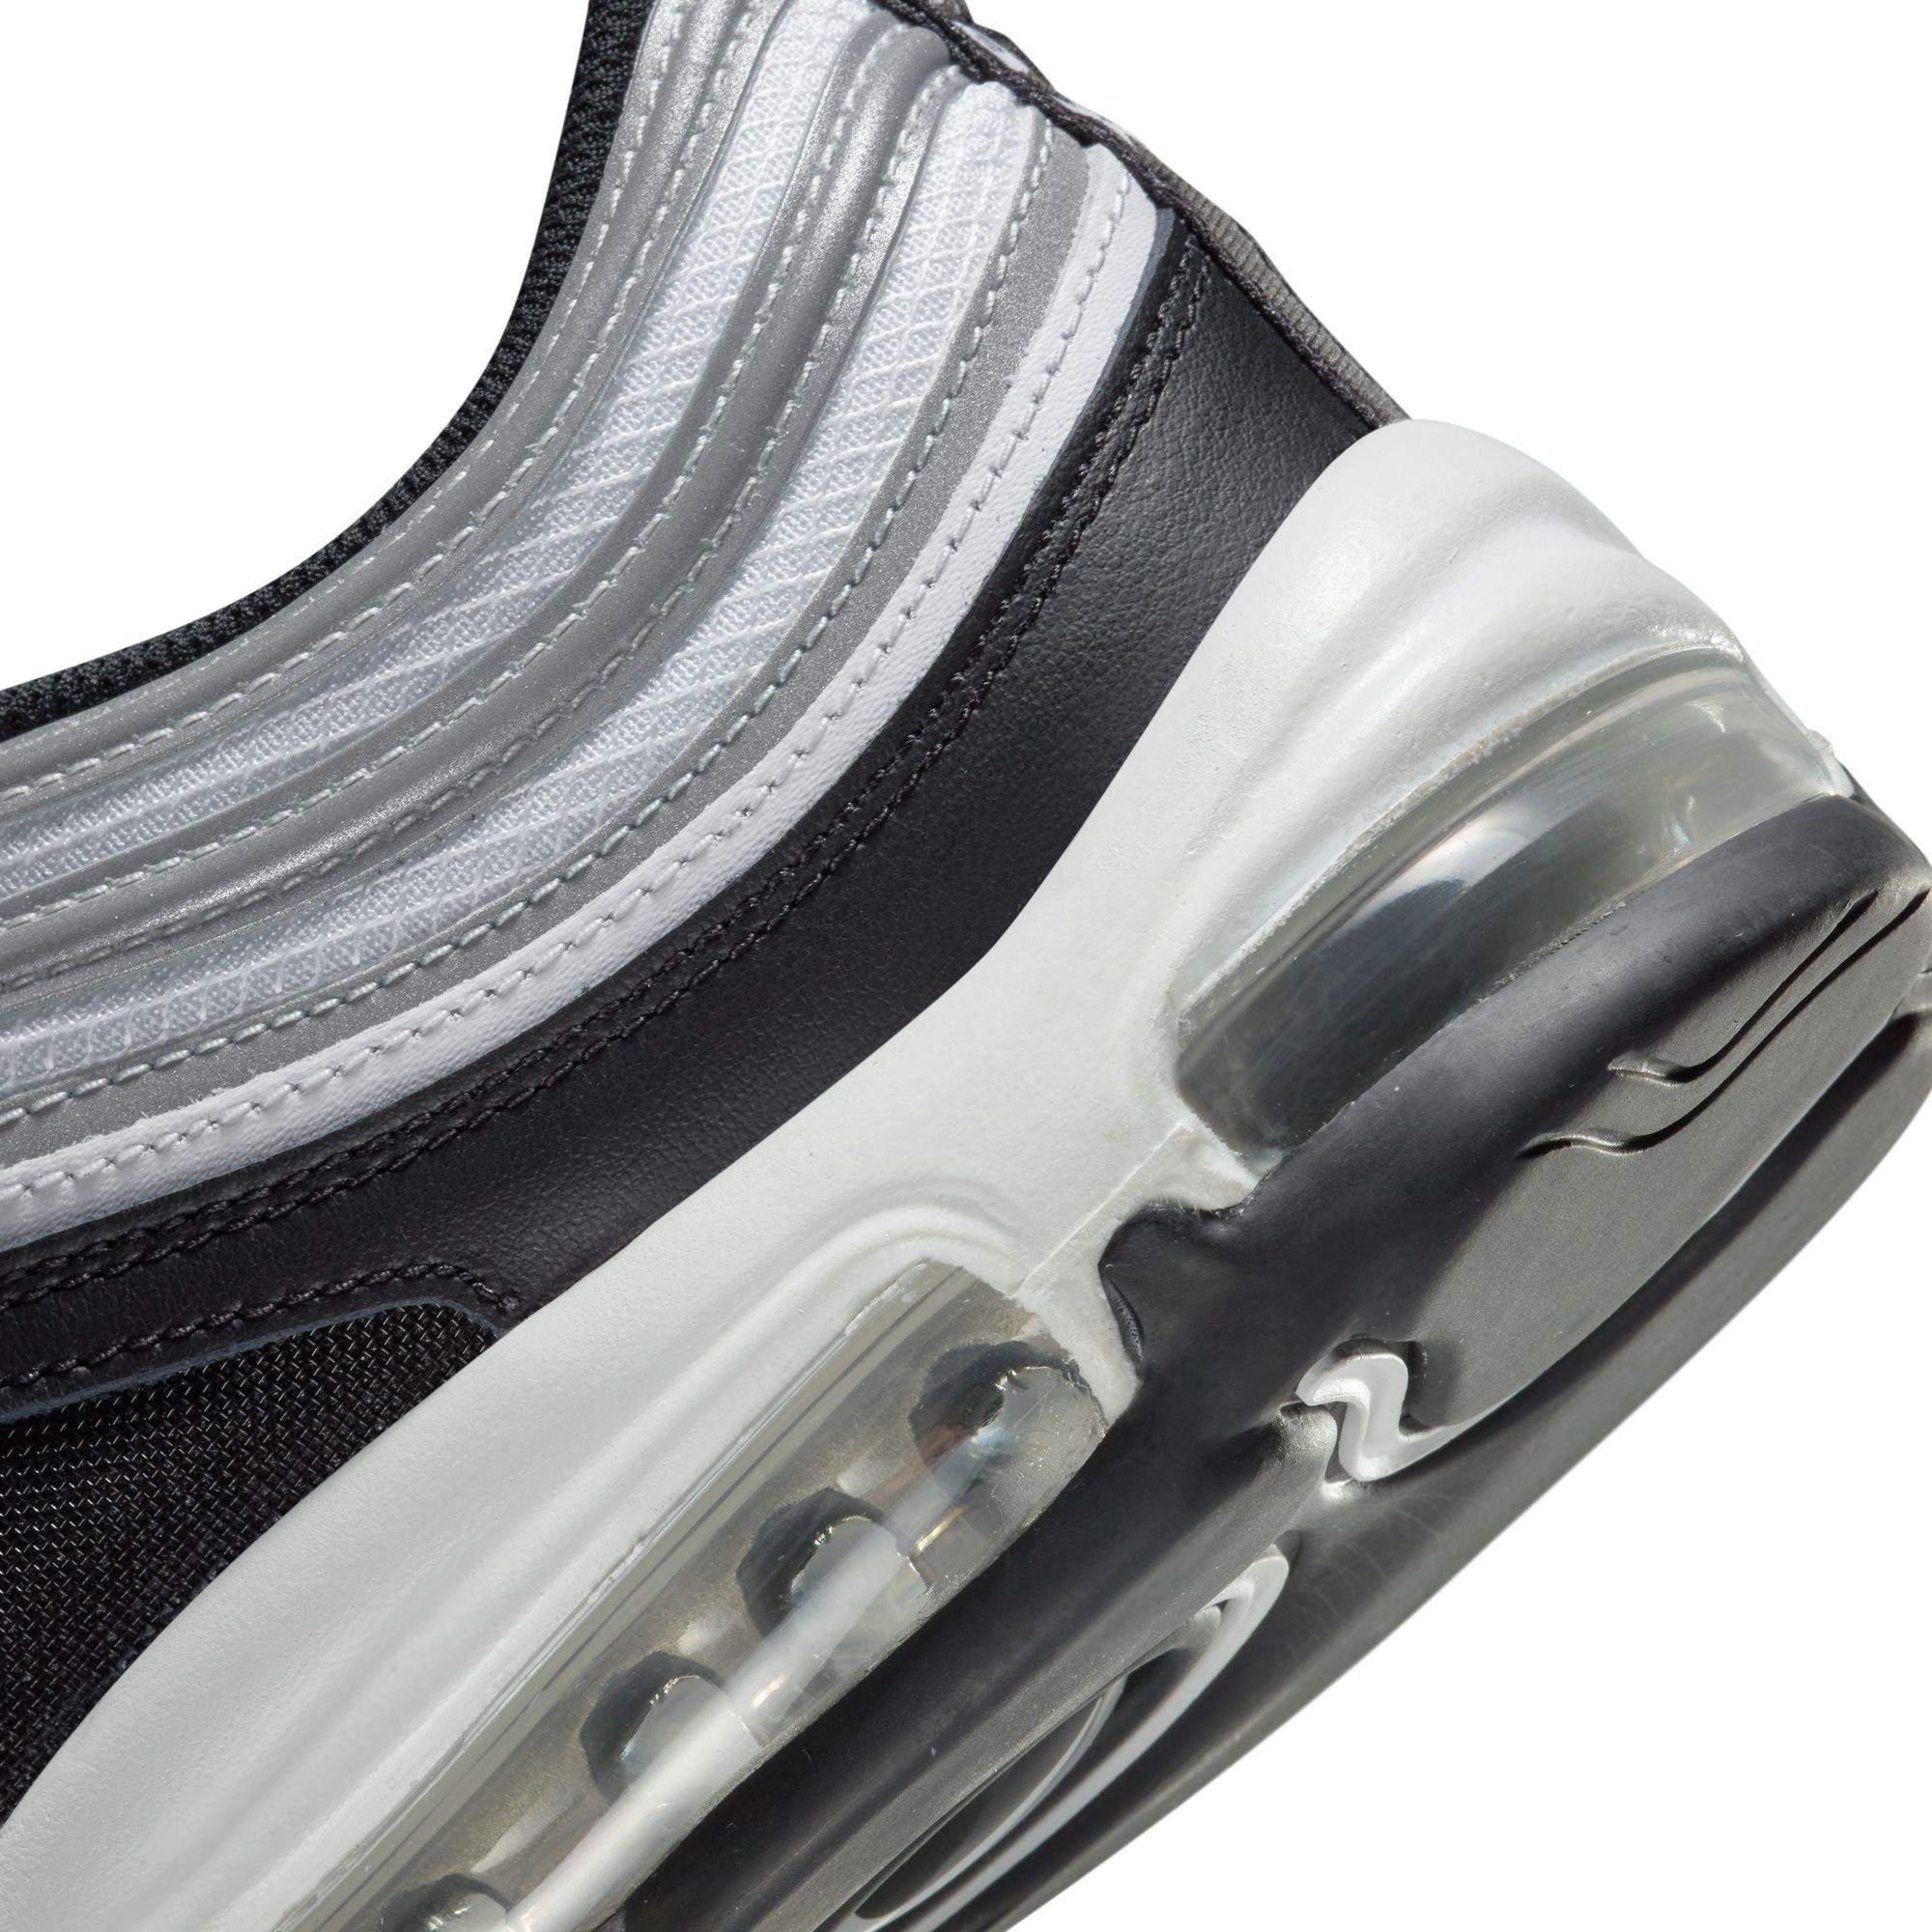 Nike 97 "Black/White/Reflect Silver" Men's - Hibbett | Gear